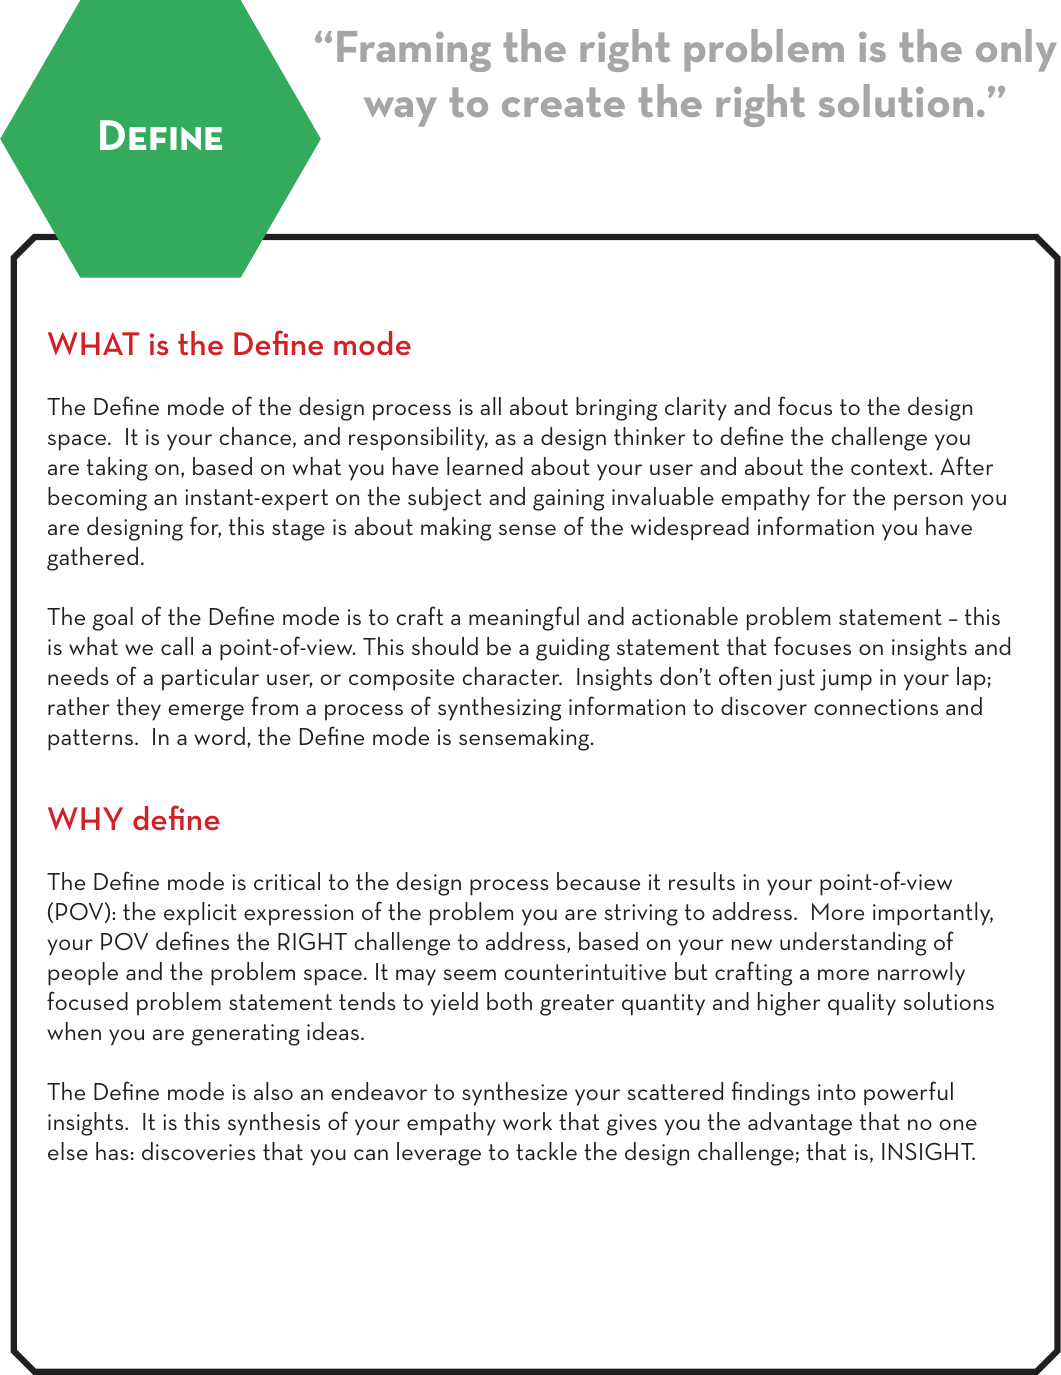 Page 4 of 11 - Stanford-d-school Design Process Mini-Guide V1 English PDF